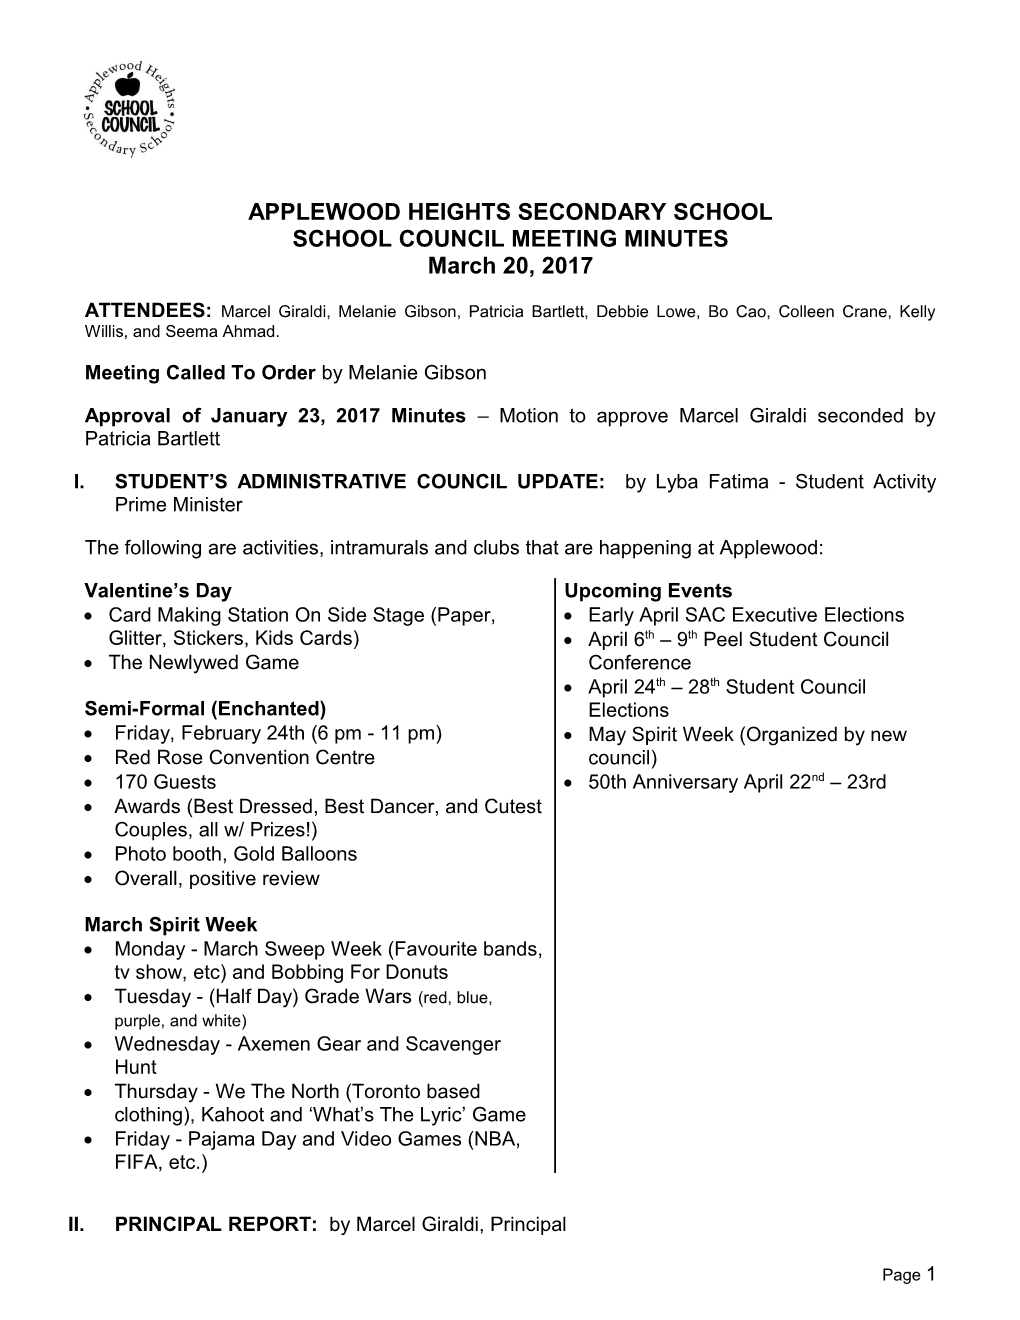 Applewood Heights Secondary School